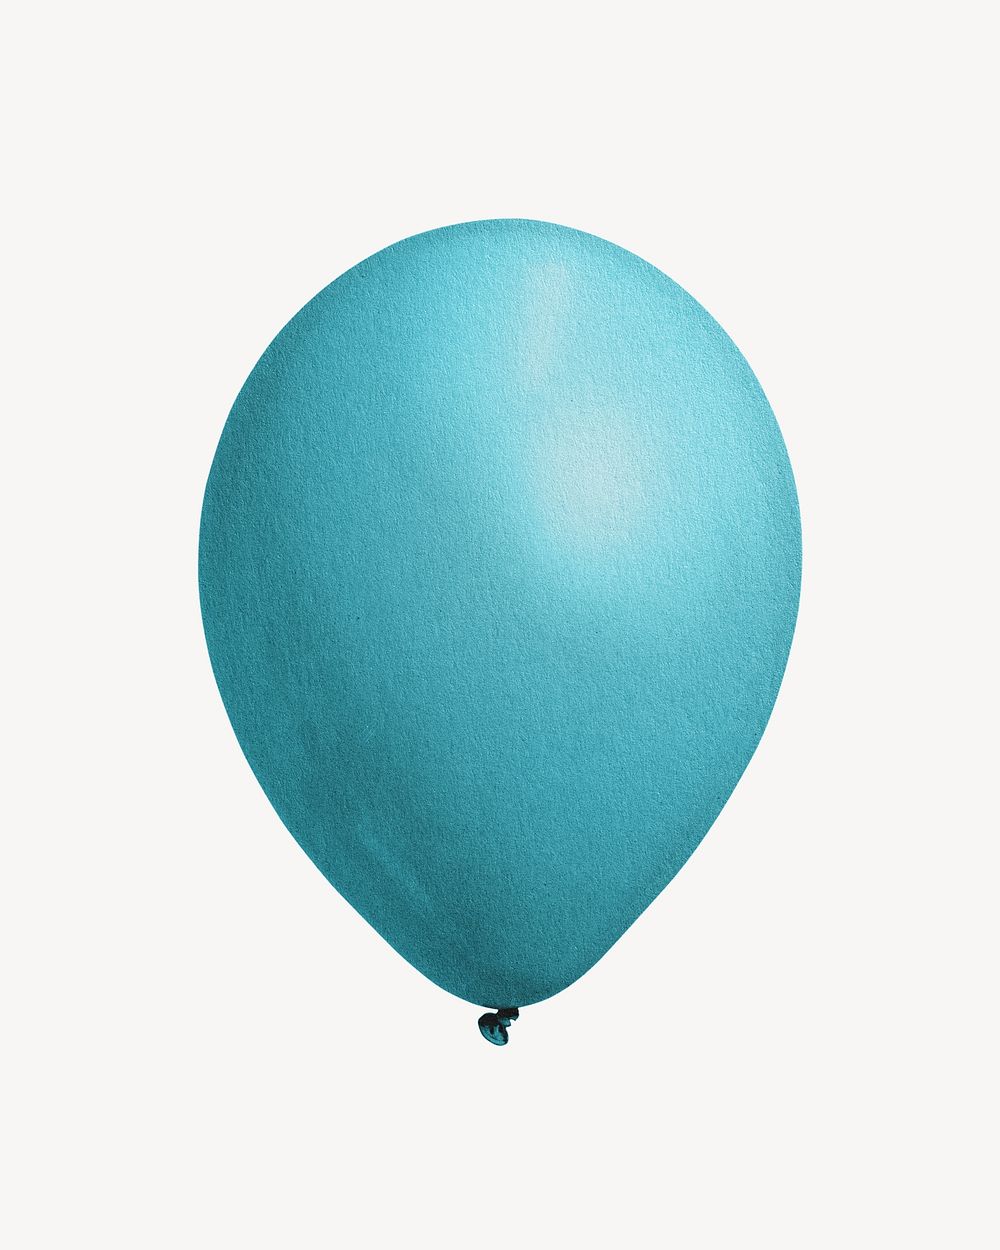 Blue balloon, party decor element